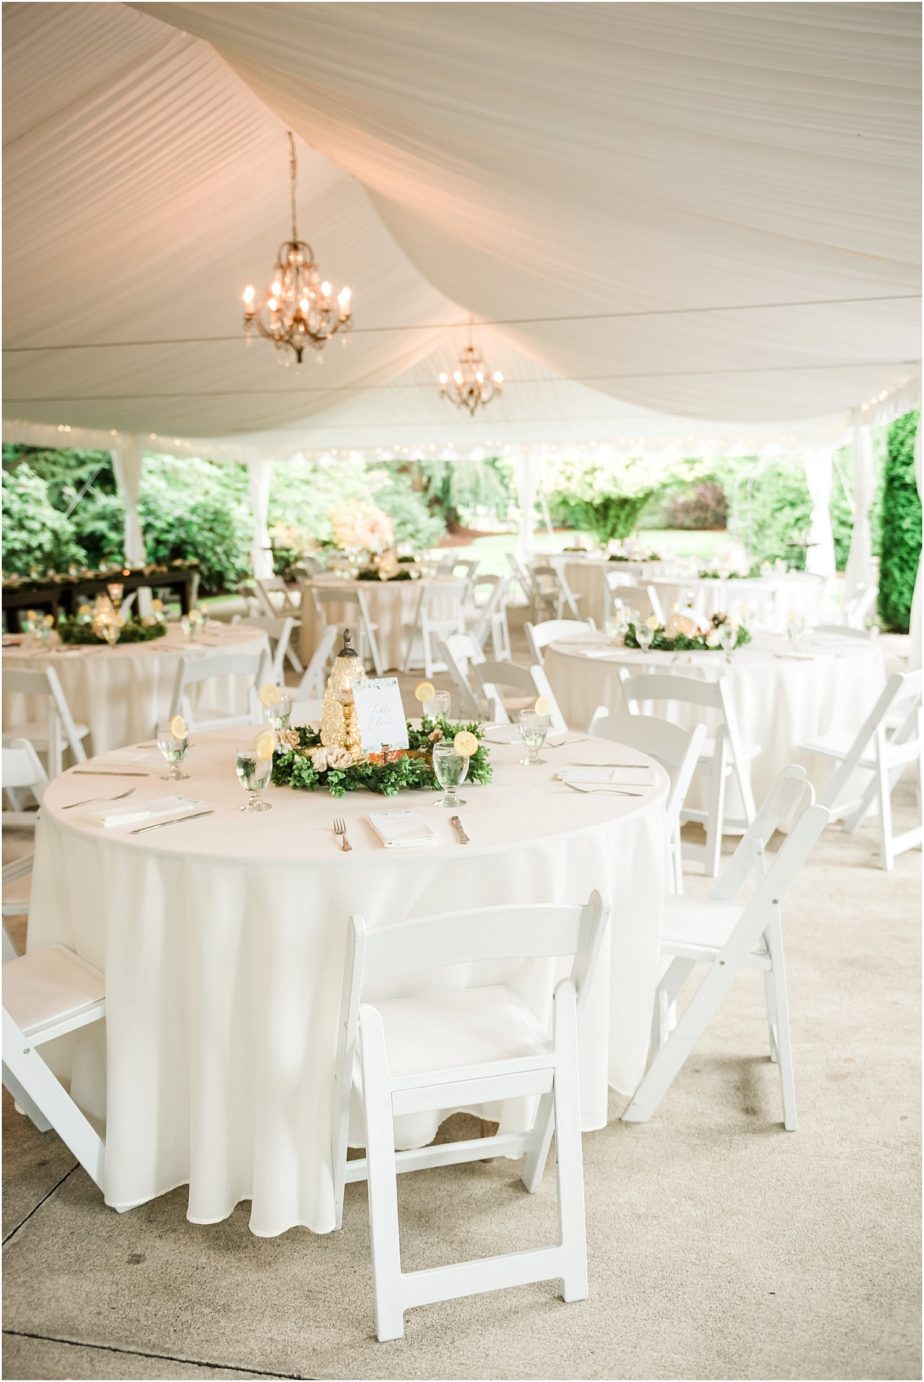 Laurel Creek Manor Wedding reception details